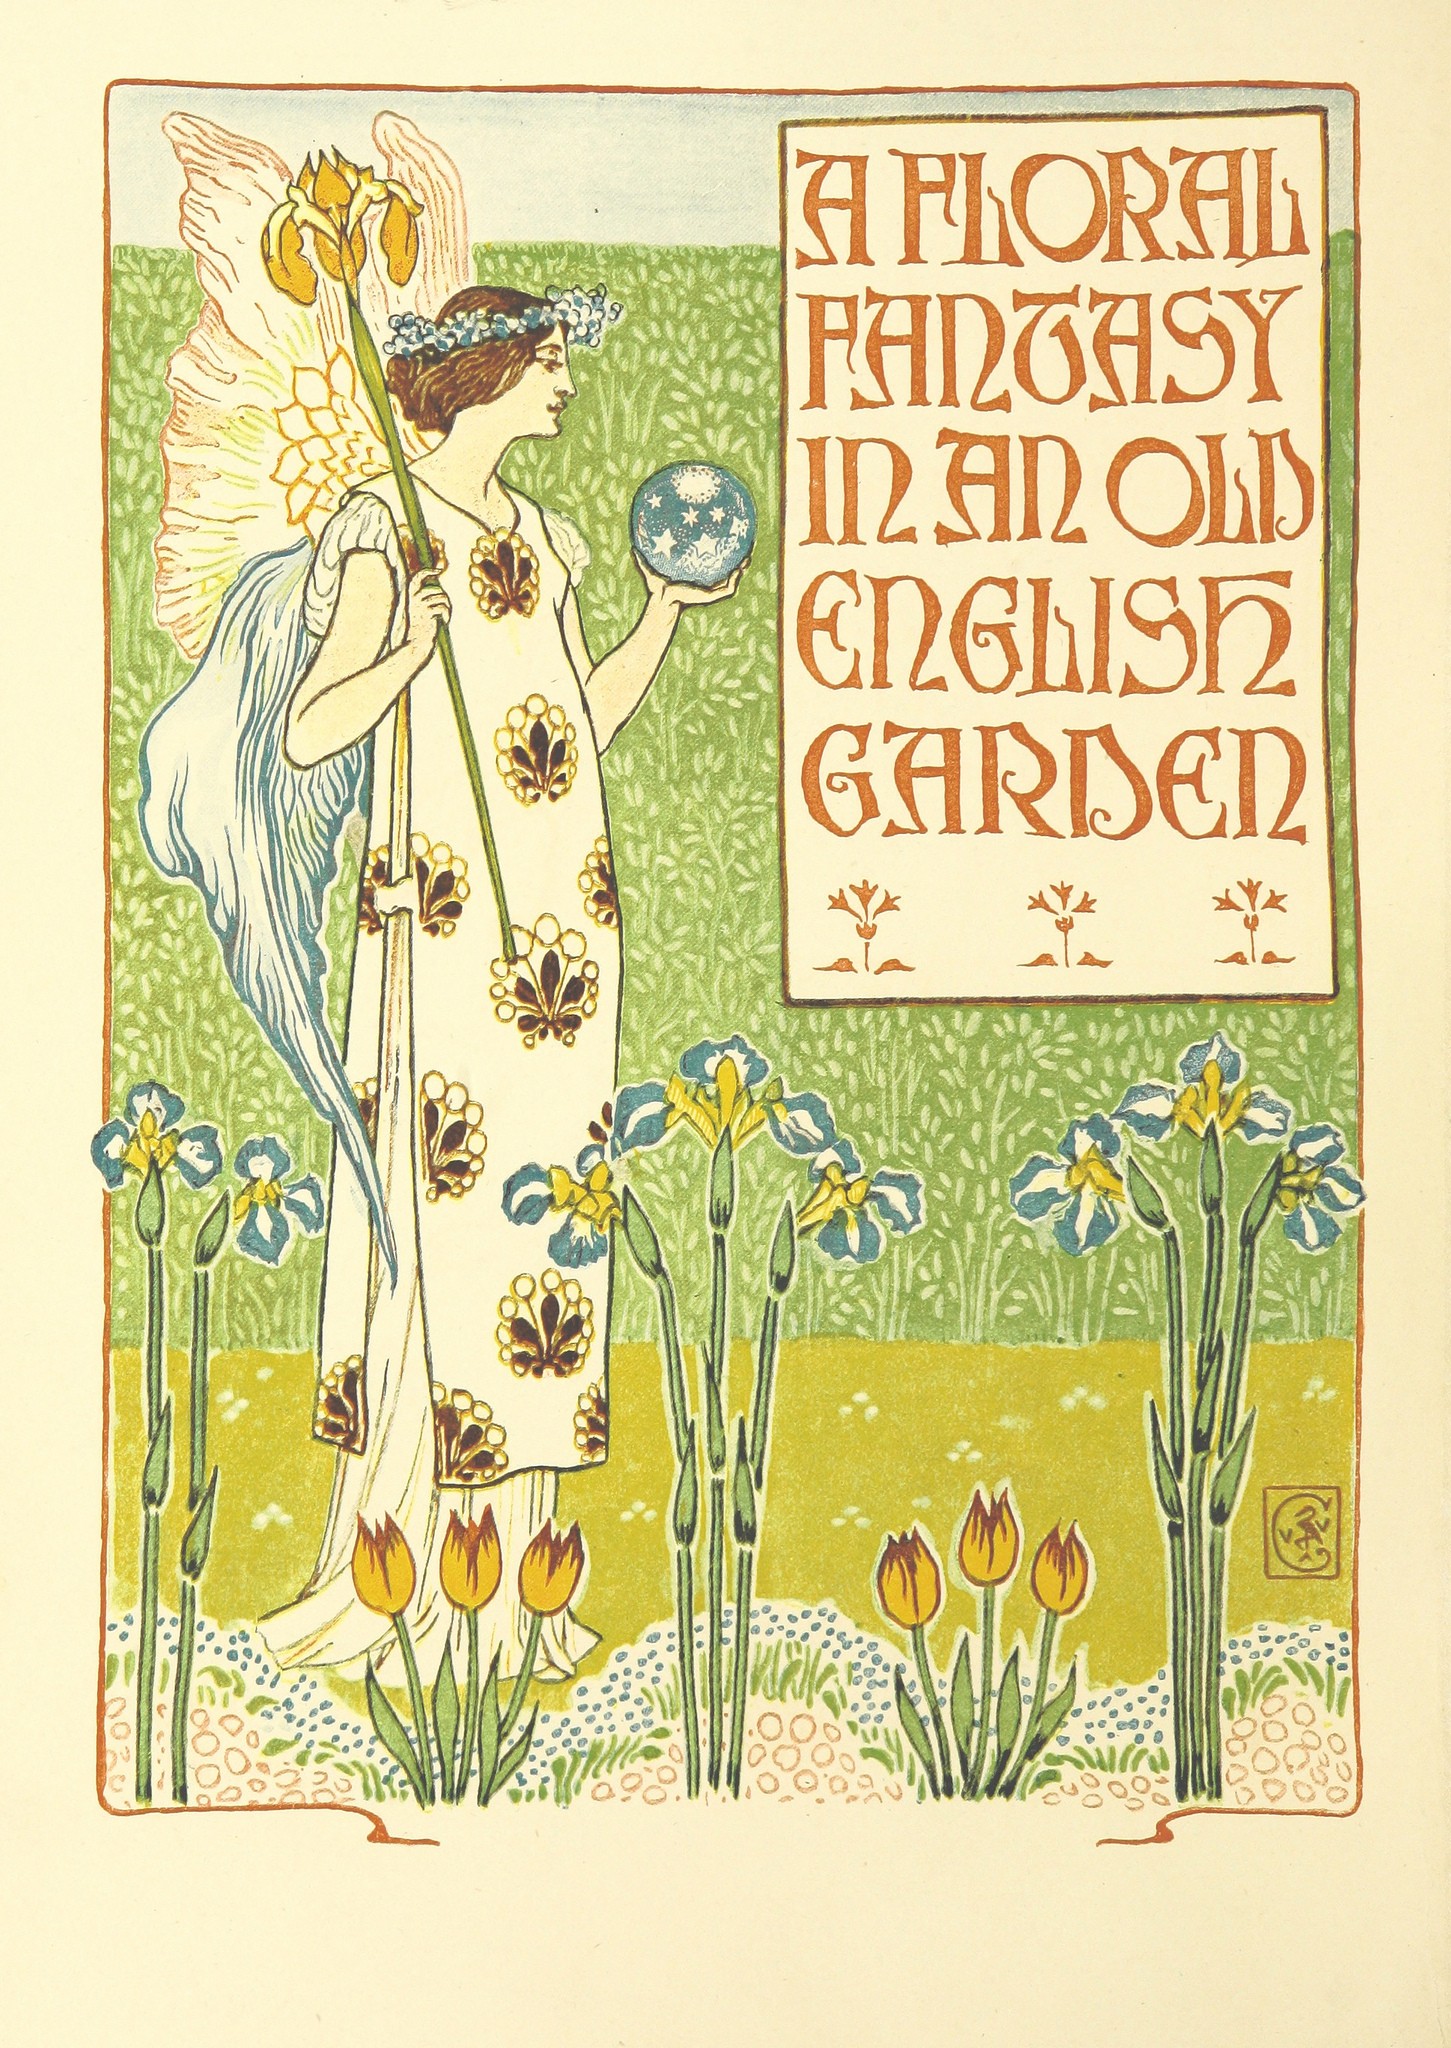 da 'A Floral Fantasy in an Old English Garden. Set forth in verses & coloured designs, Walter Crane, 1899